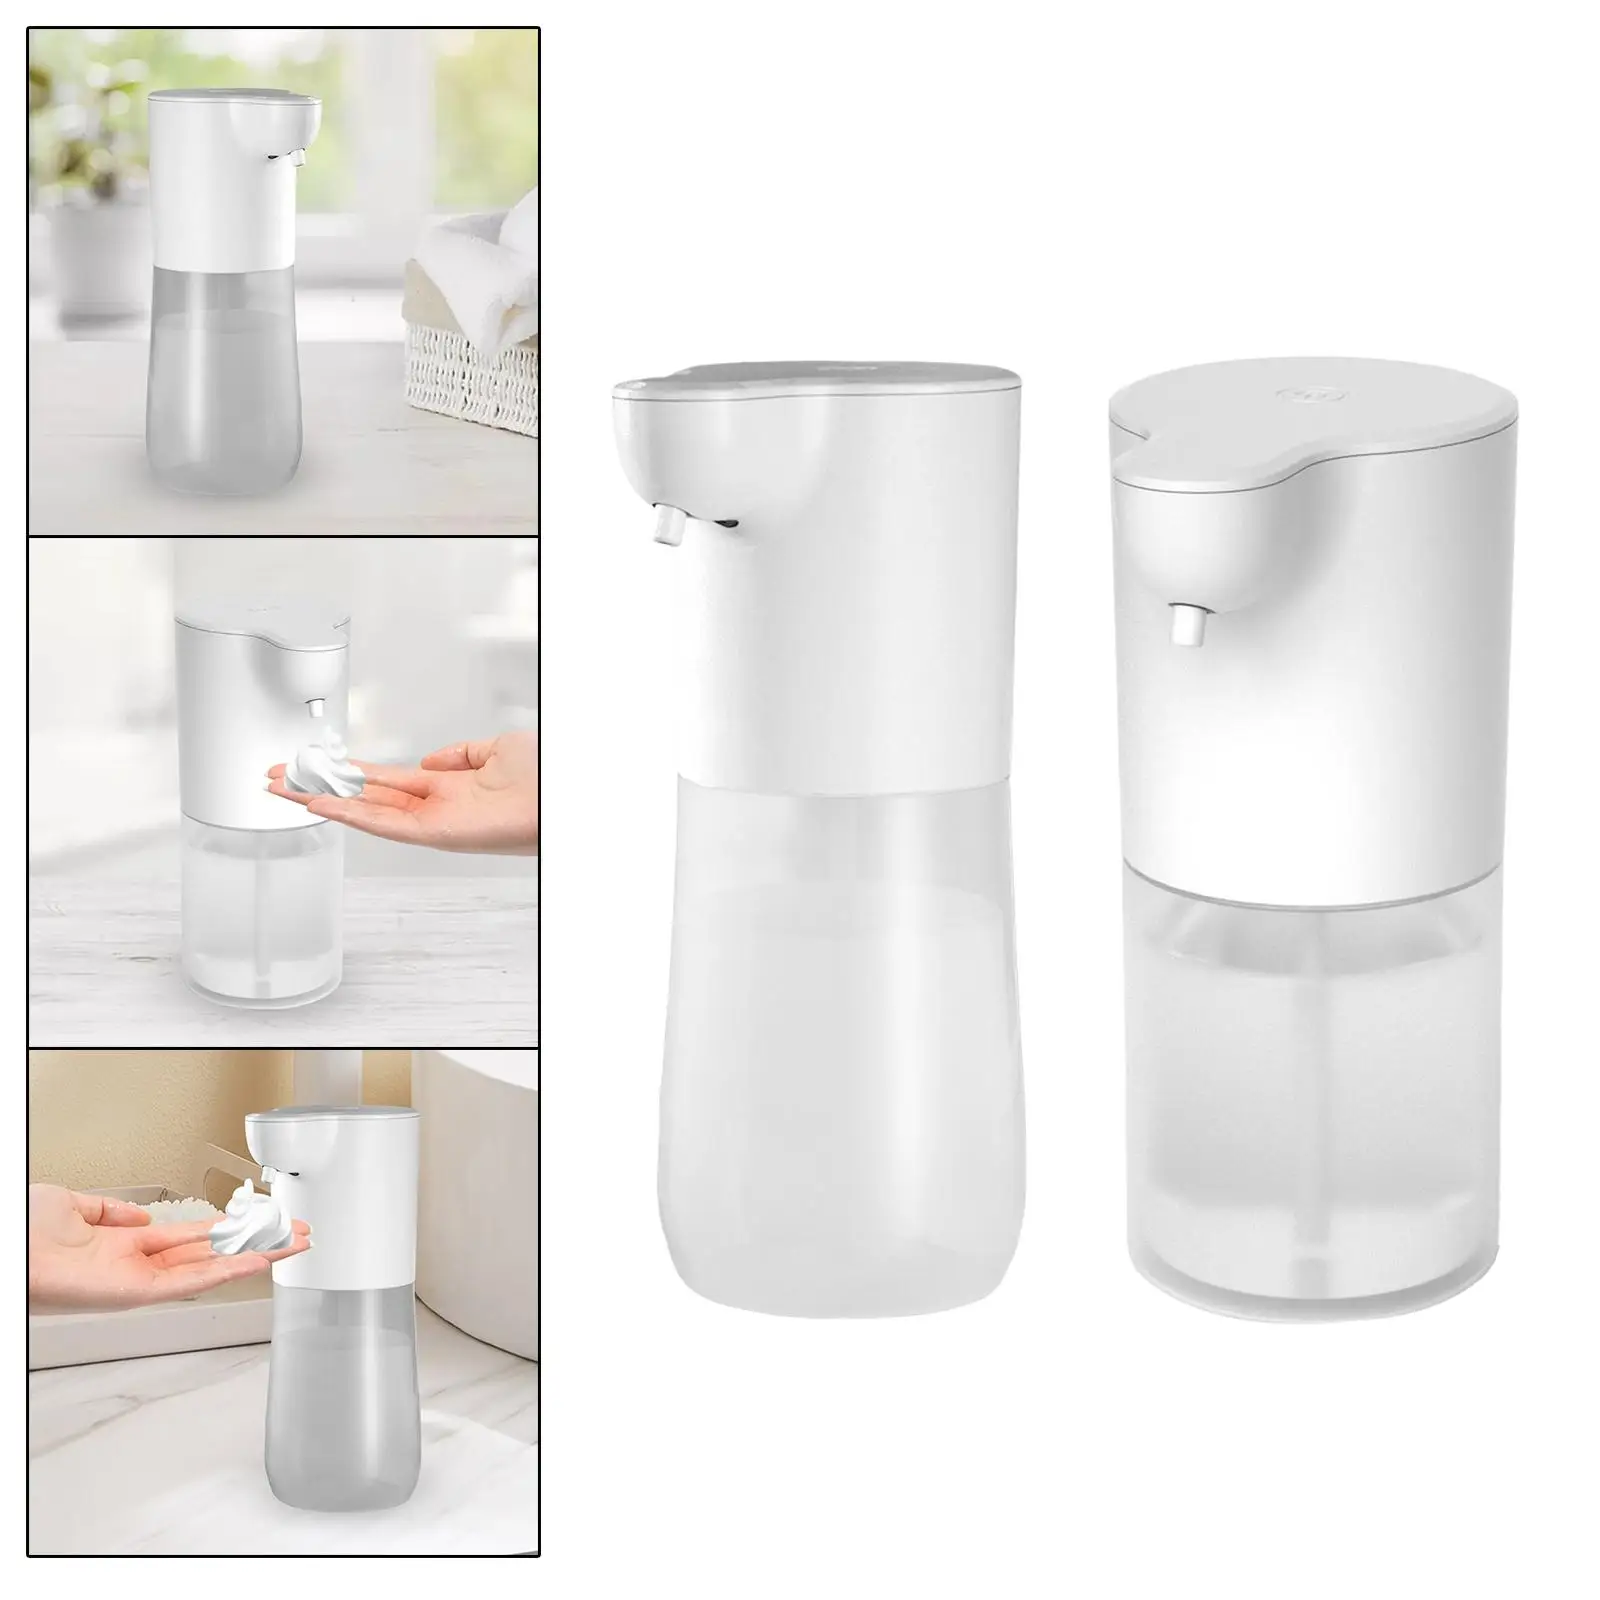 Fast Induction Automatic Liquid Soap Dispenser Waterproof Sensor Touchless Hands Dispensers for Washroom Children Kids